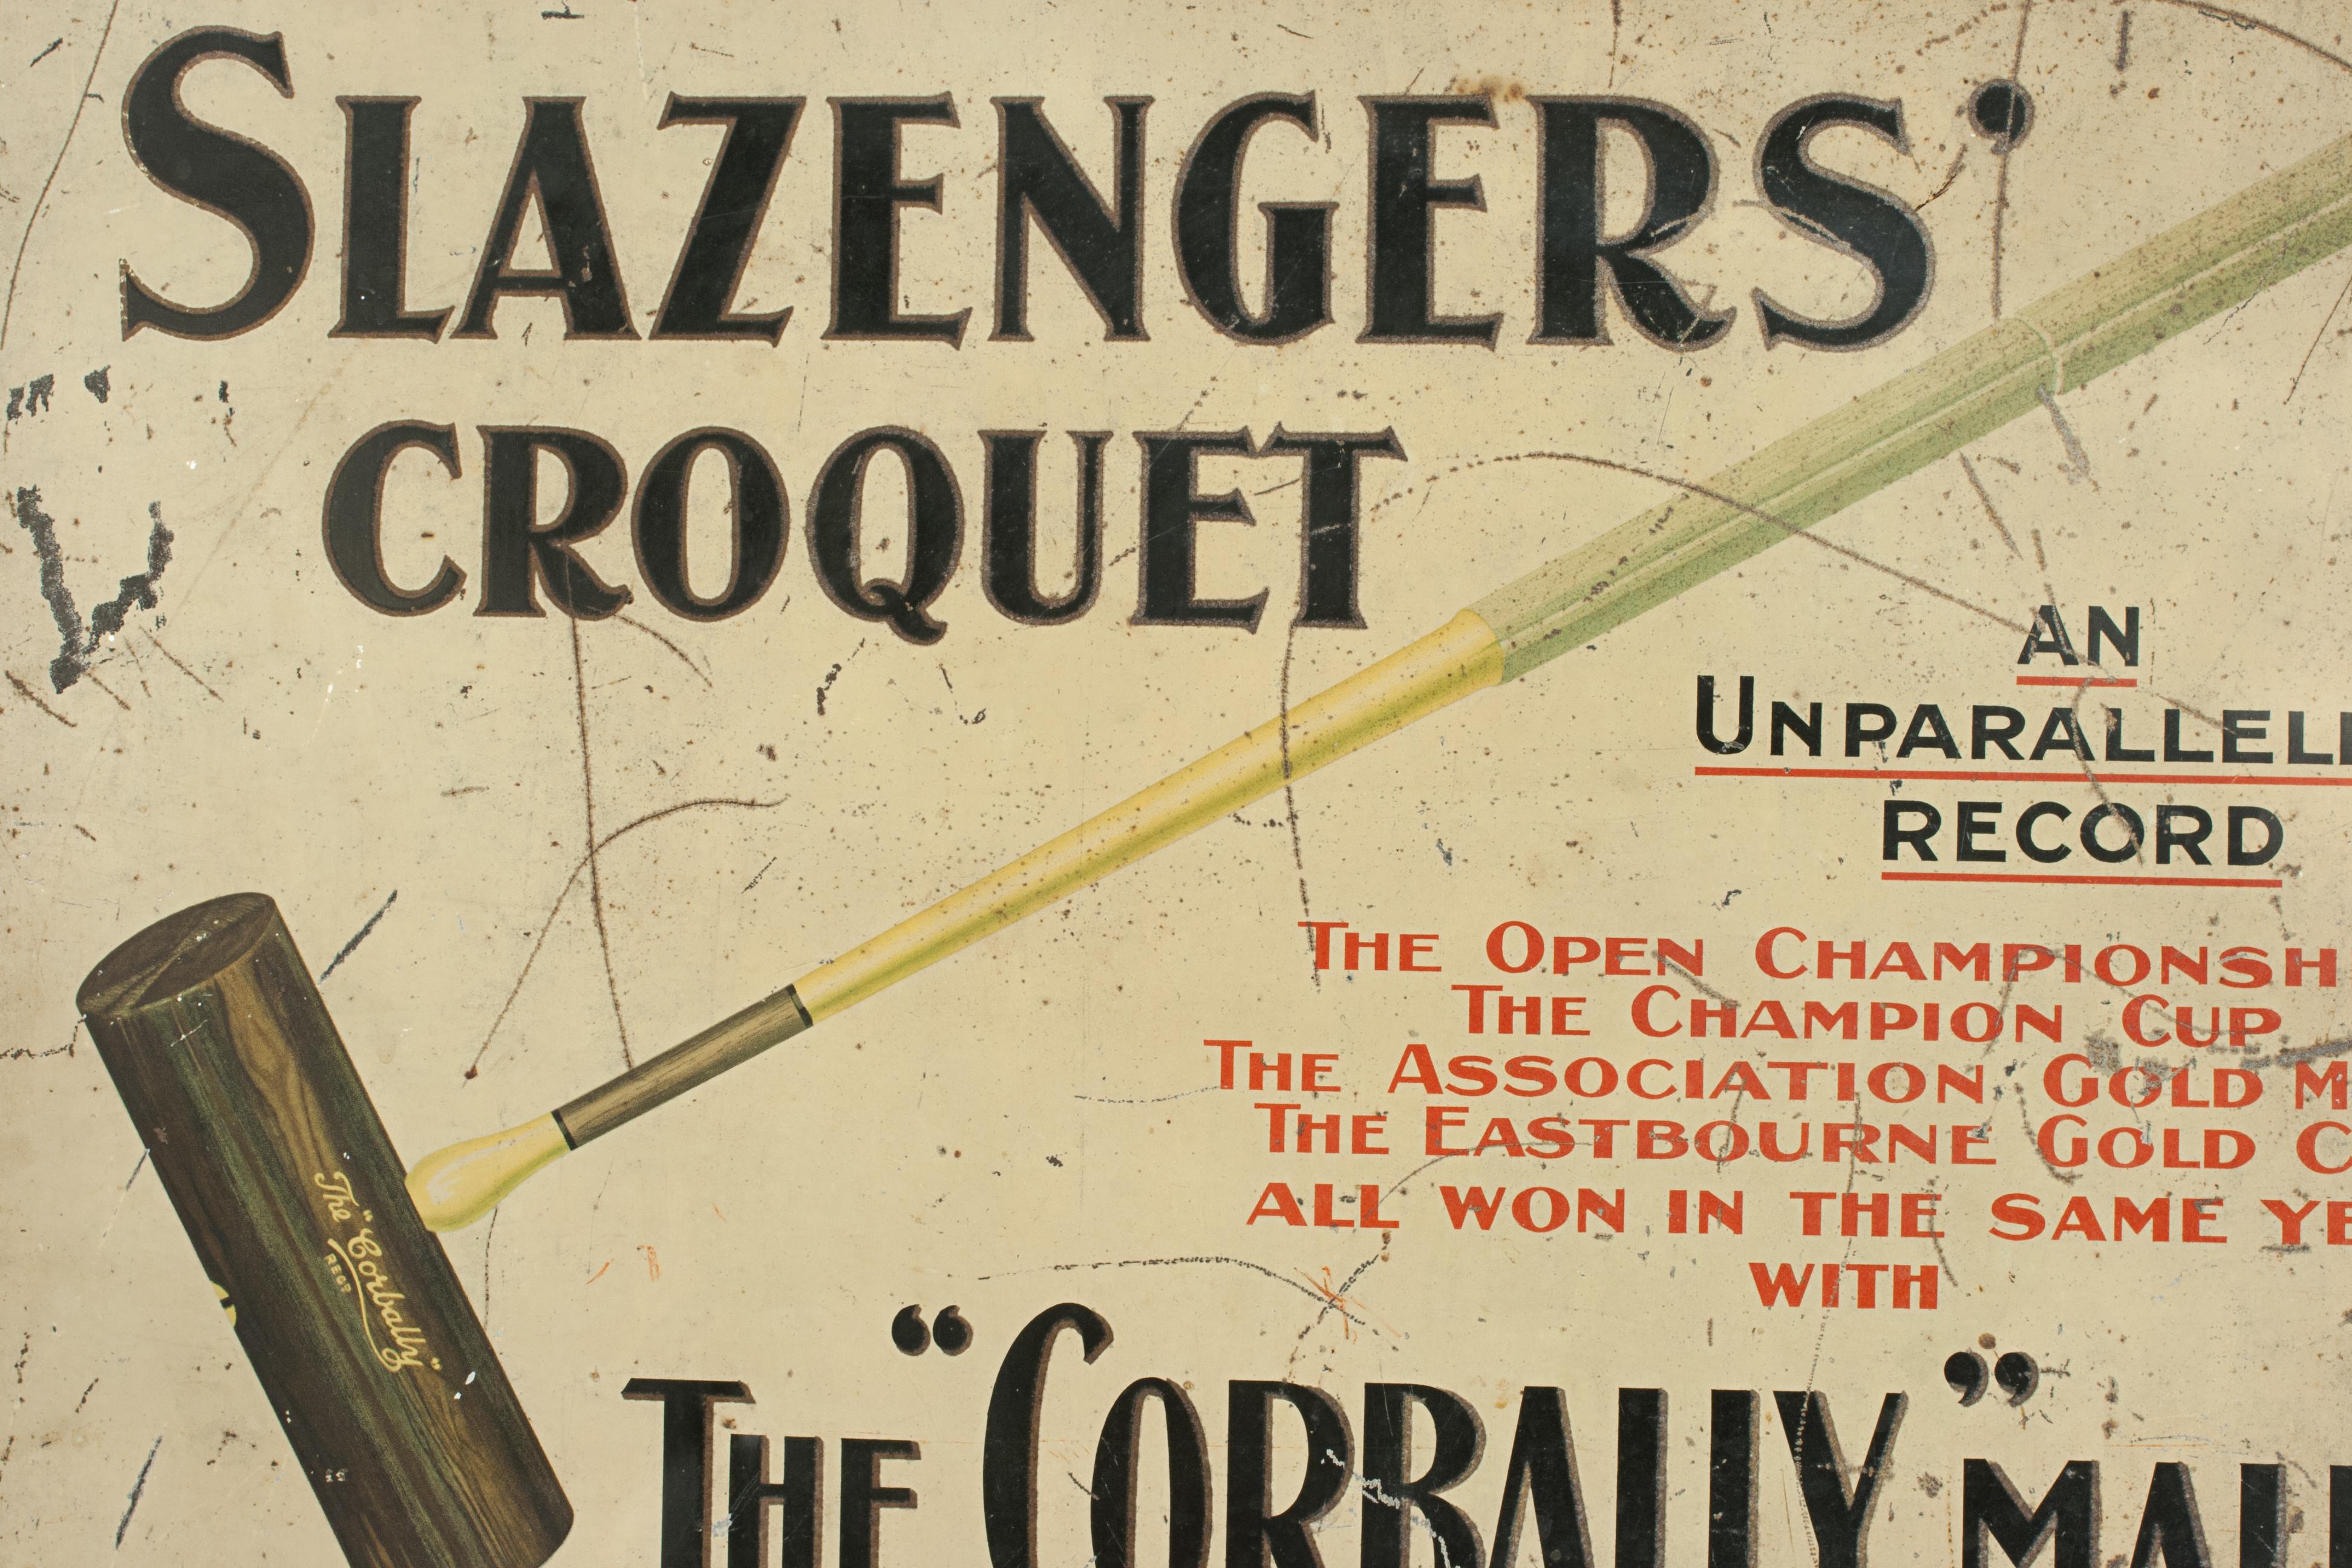 Tin Slazenger 'the Corbally' Croquet Mallet Advertising Sign